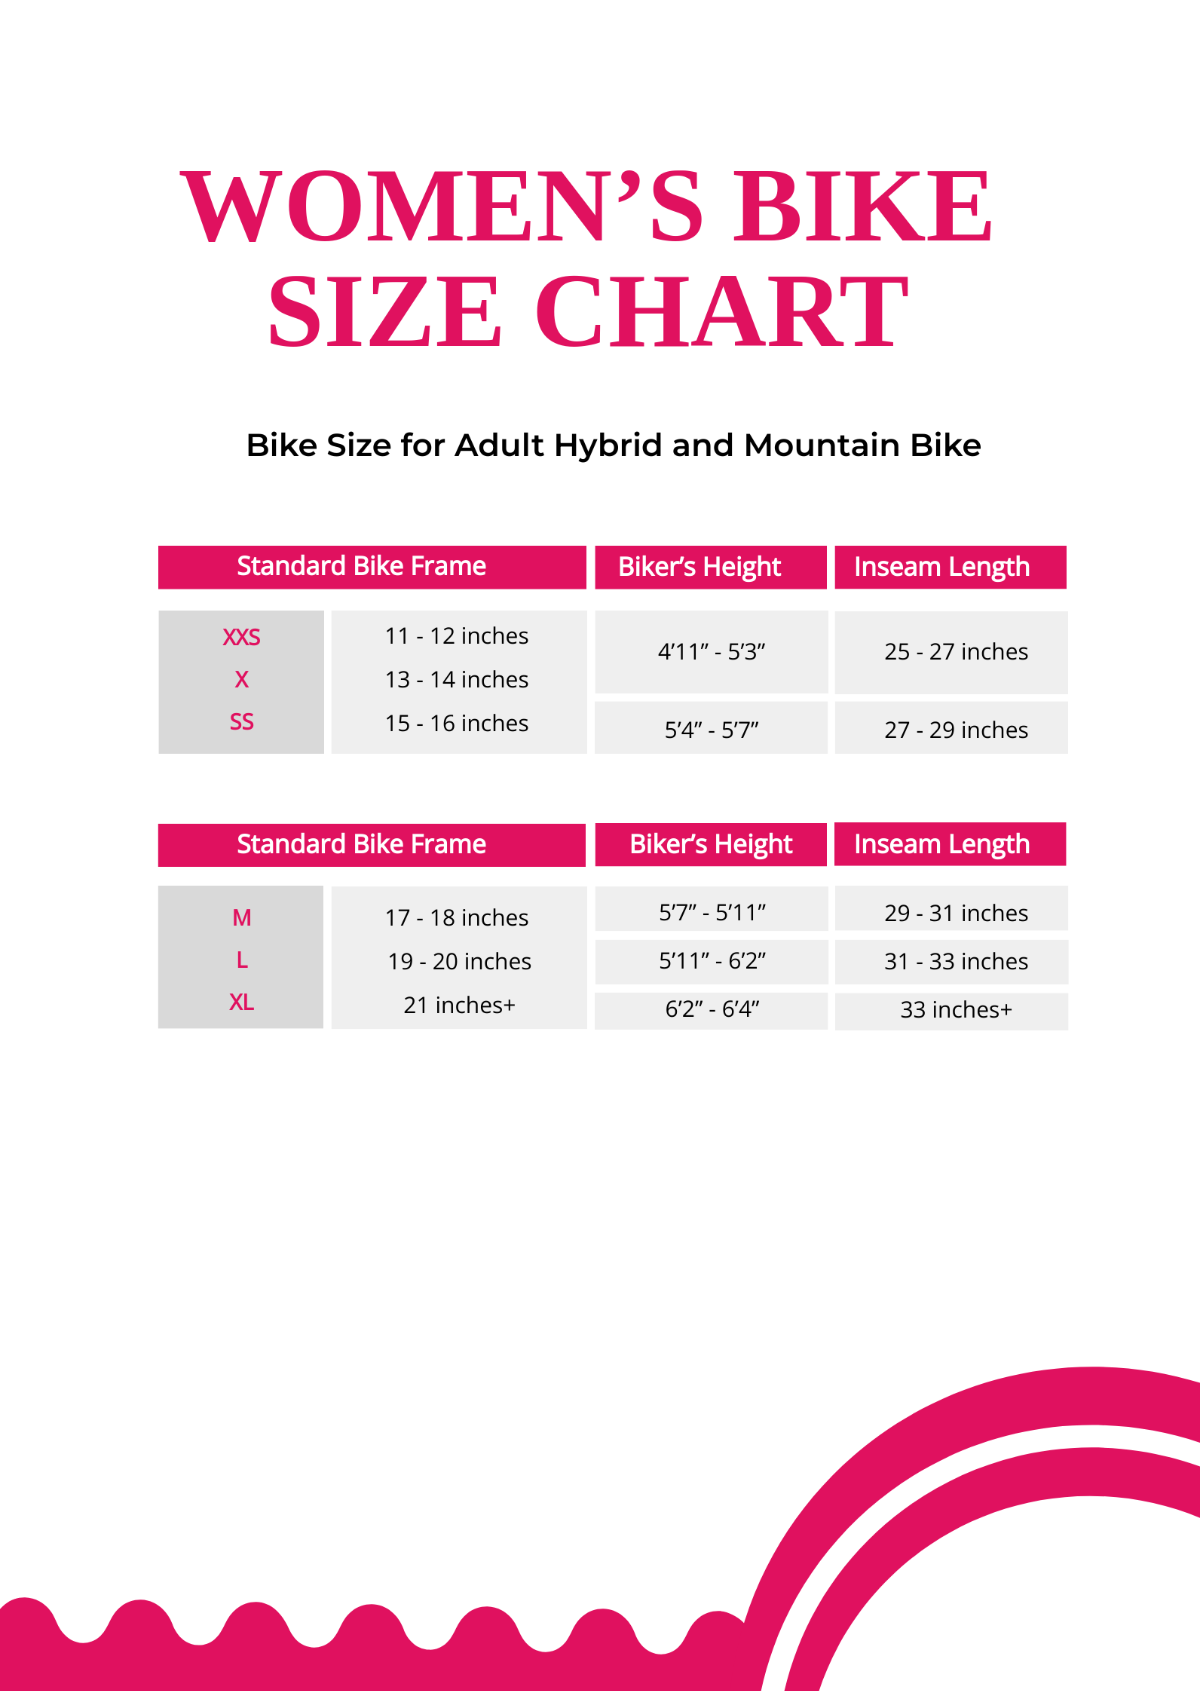 Women's Bike Size Chart Template